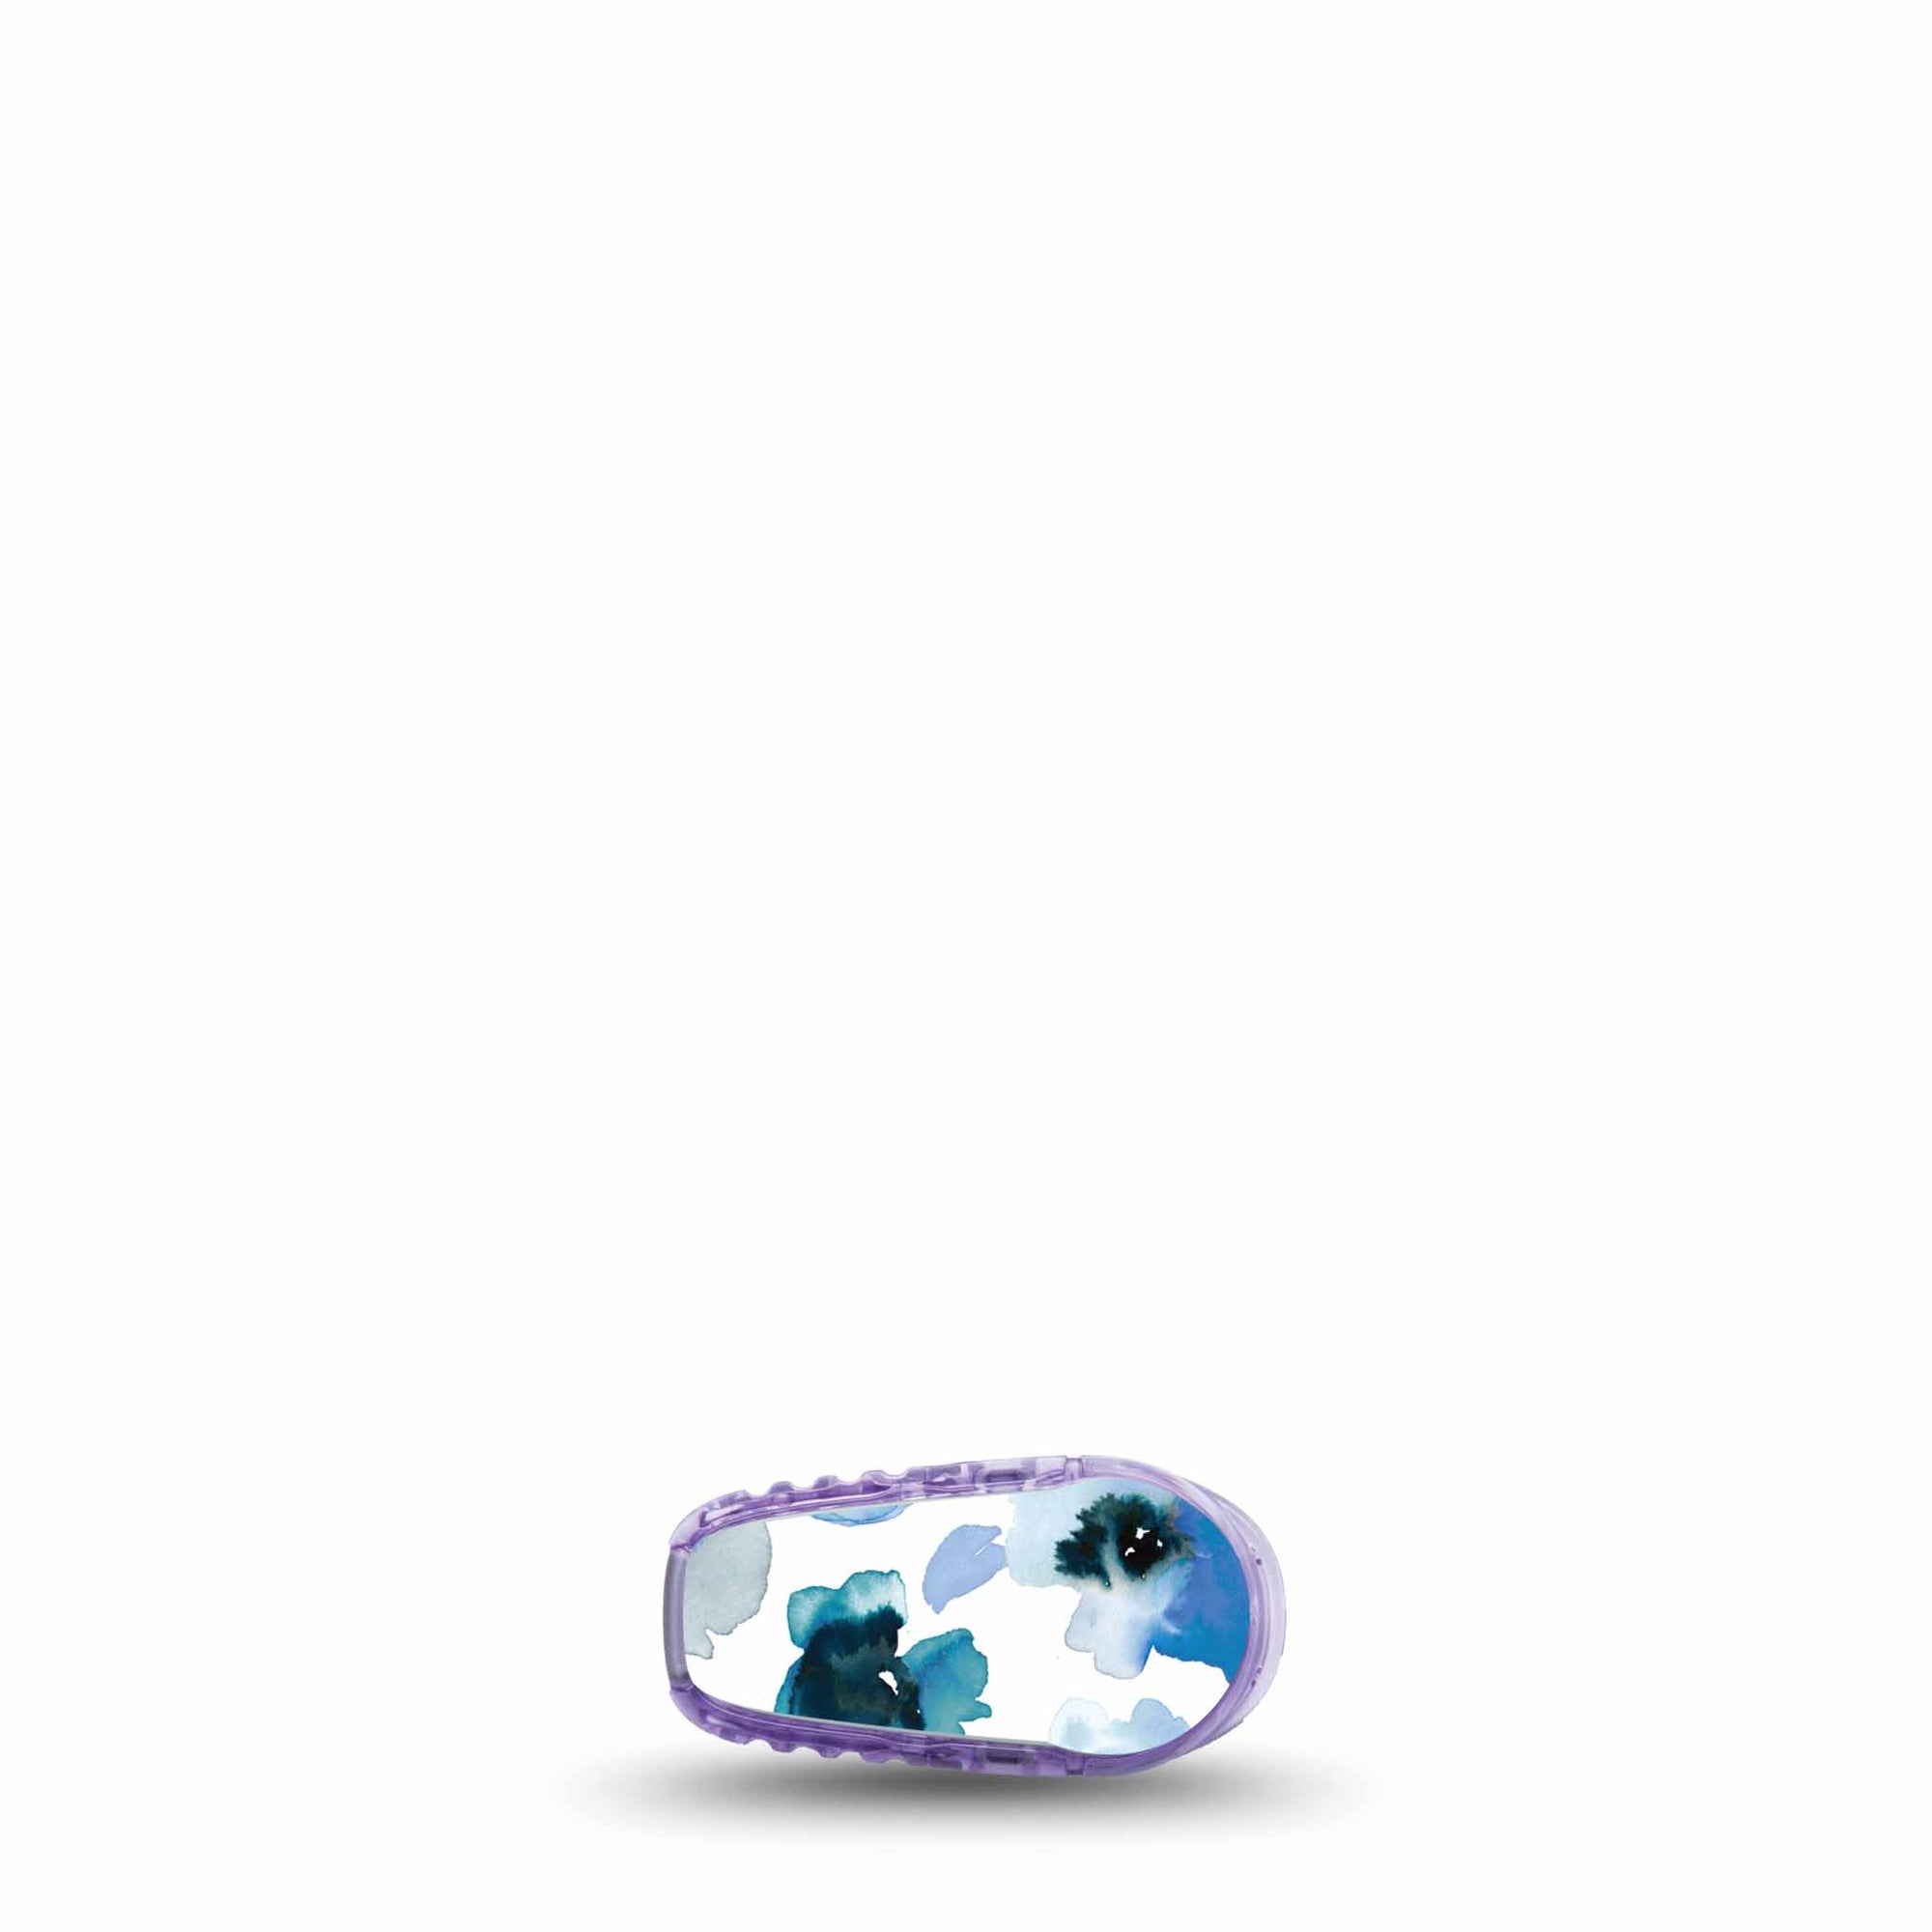 ExpressionMed Sapphire Petals Dexcom G6 Transmitter Sticker, Blue Floral Design